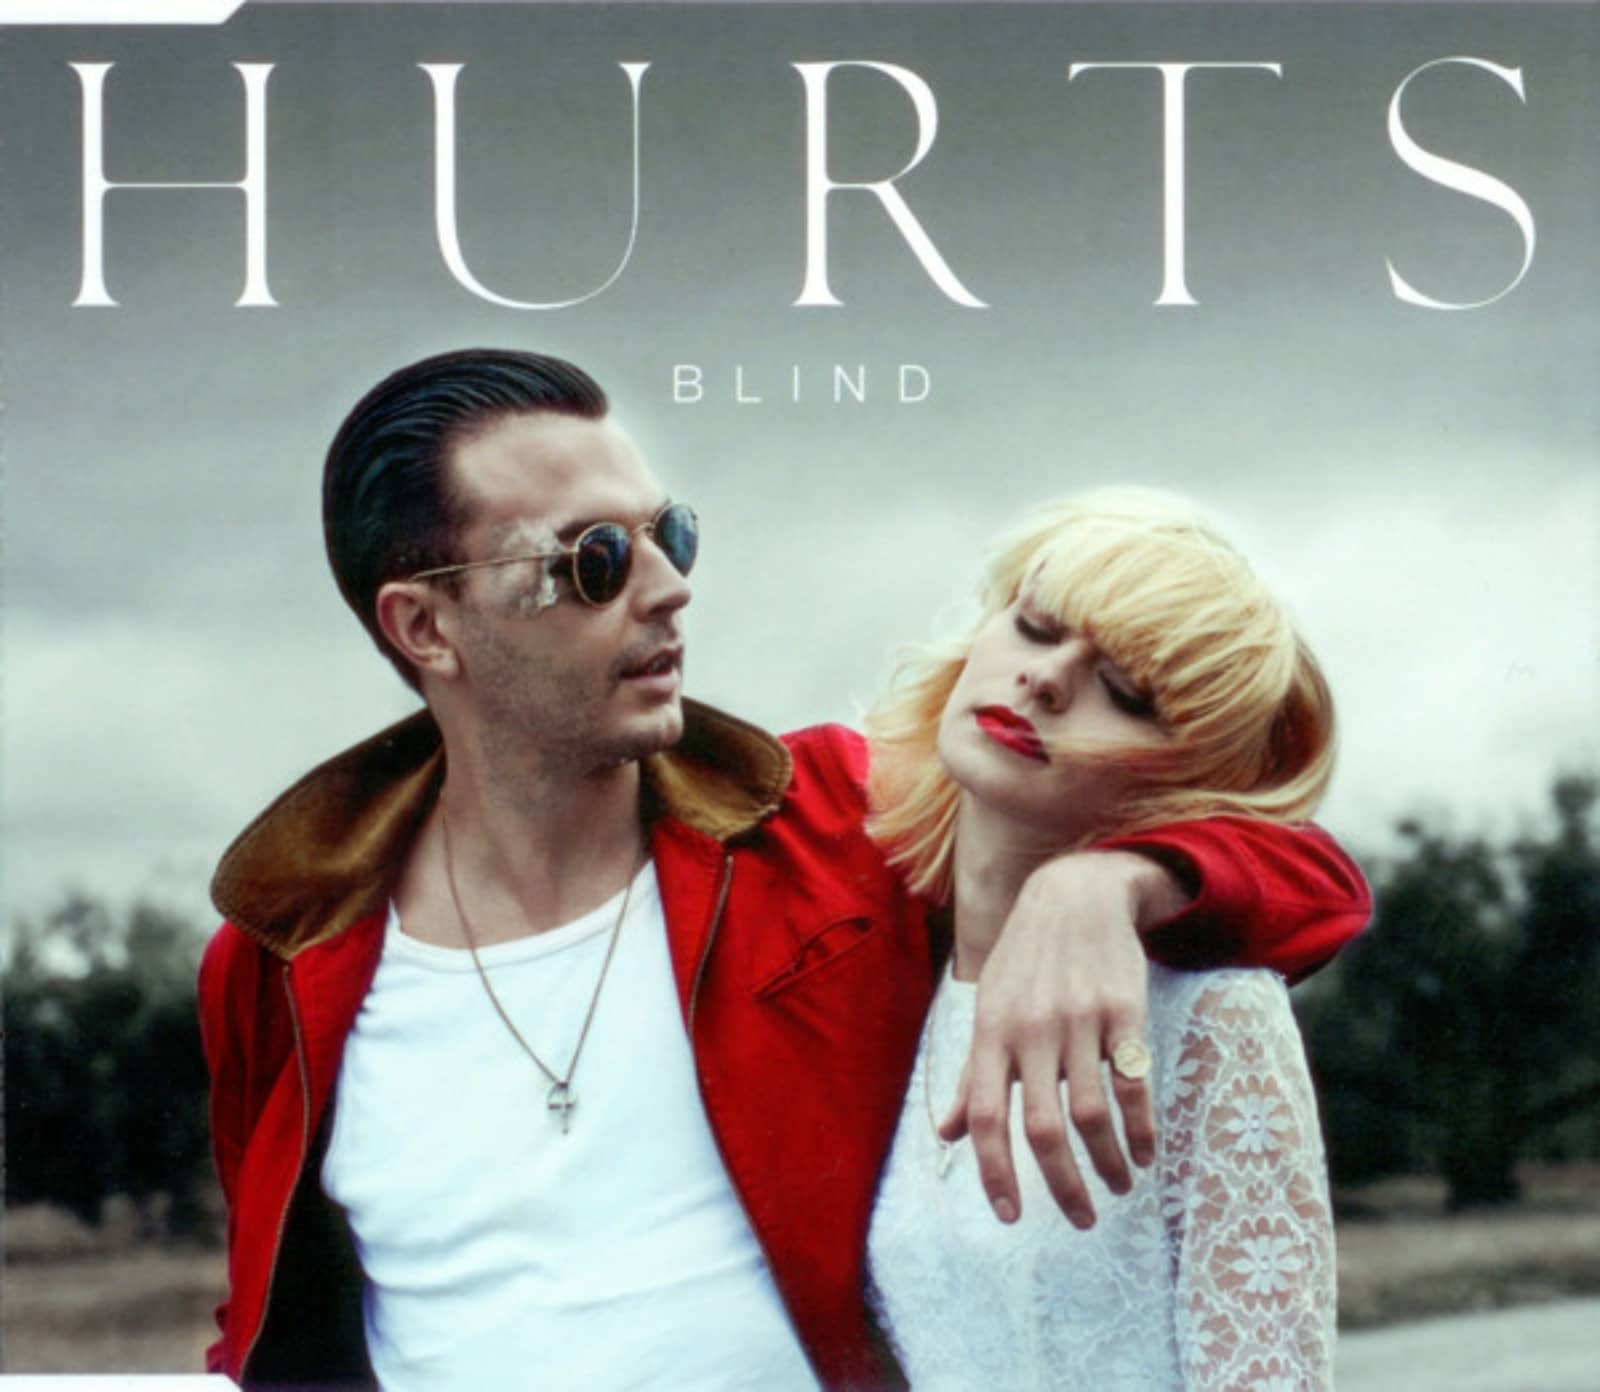 Музыка hurt. Группа hurts. Hurts Blind. Hurts обложки. Hurts группа 2010.